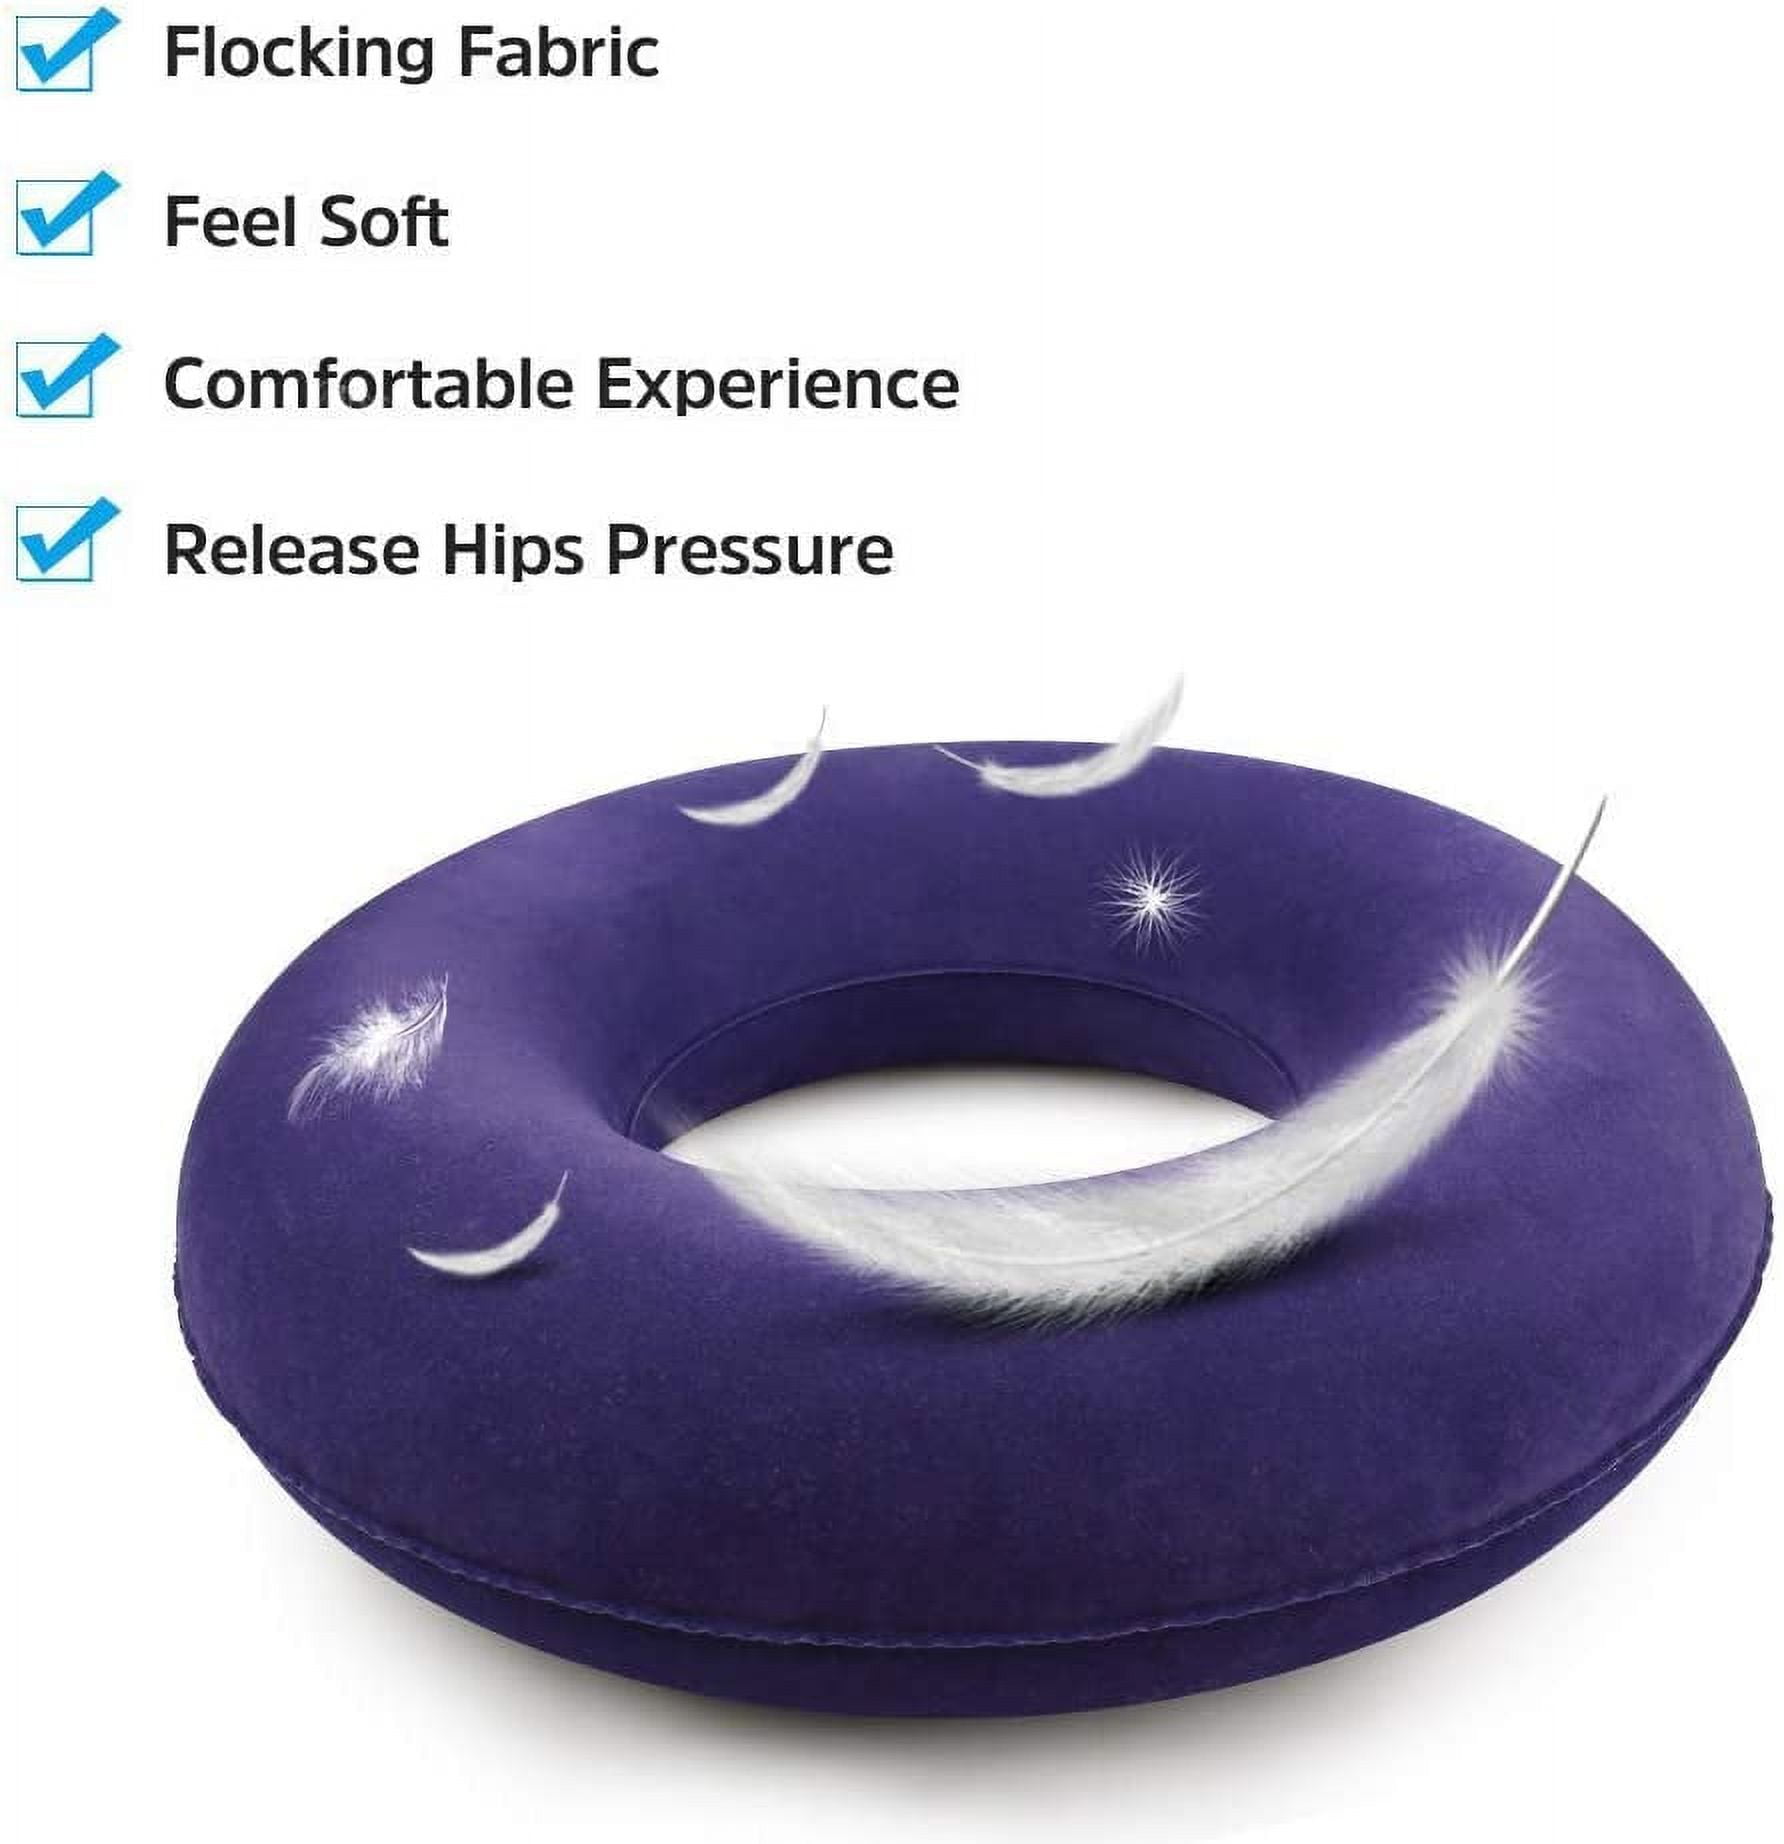 SZXMDKH Hemorrhoid Donut Seat, Inflatable Ring Donut Cushion